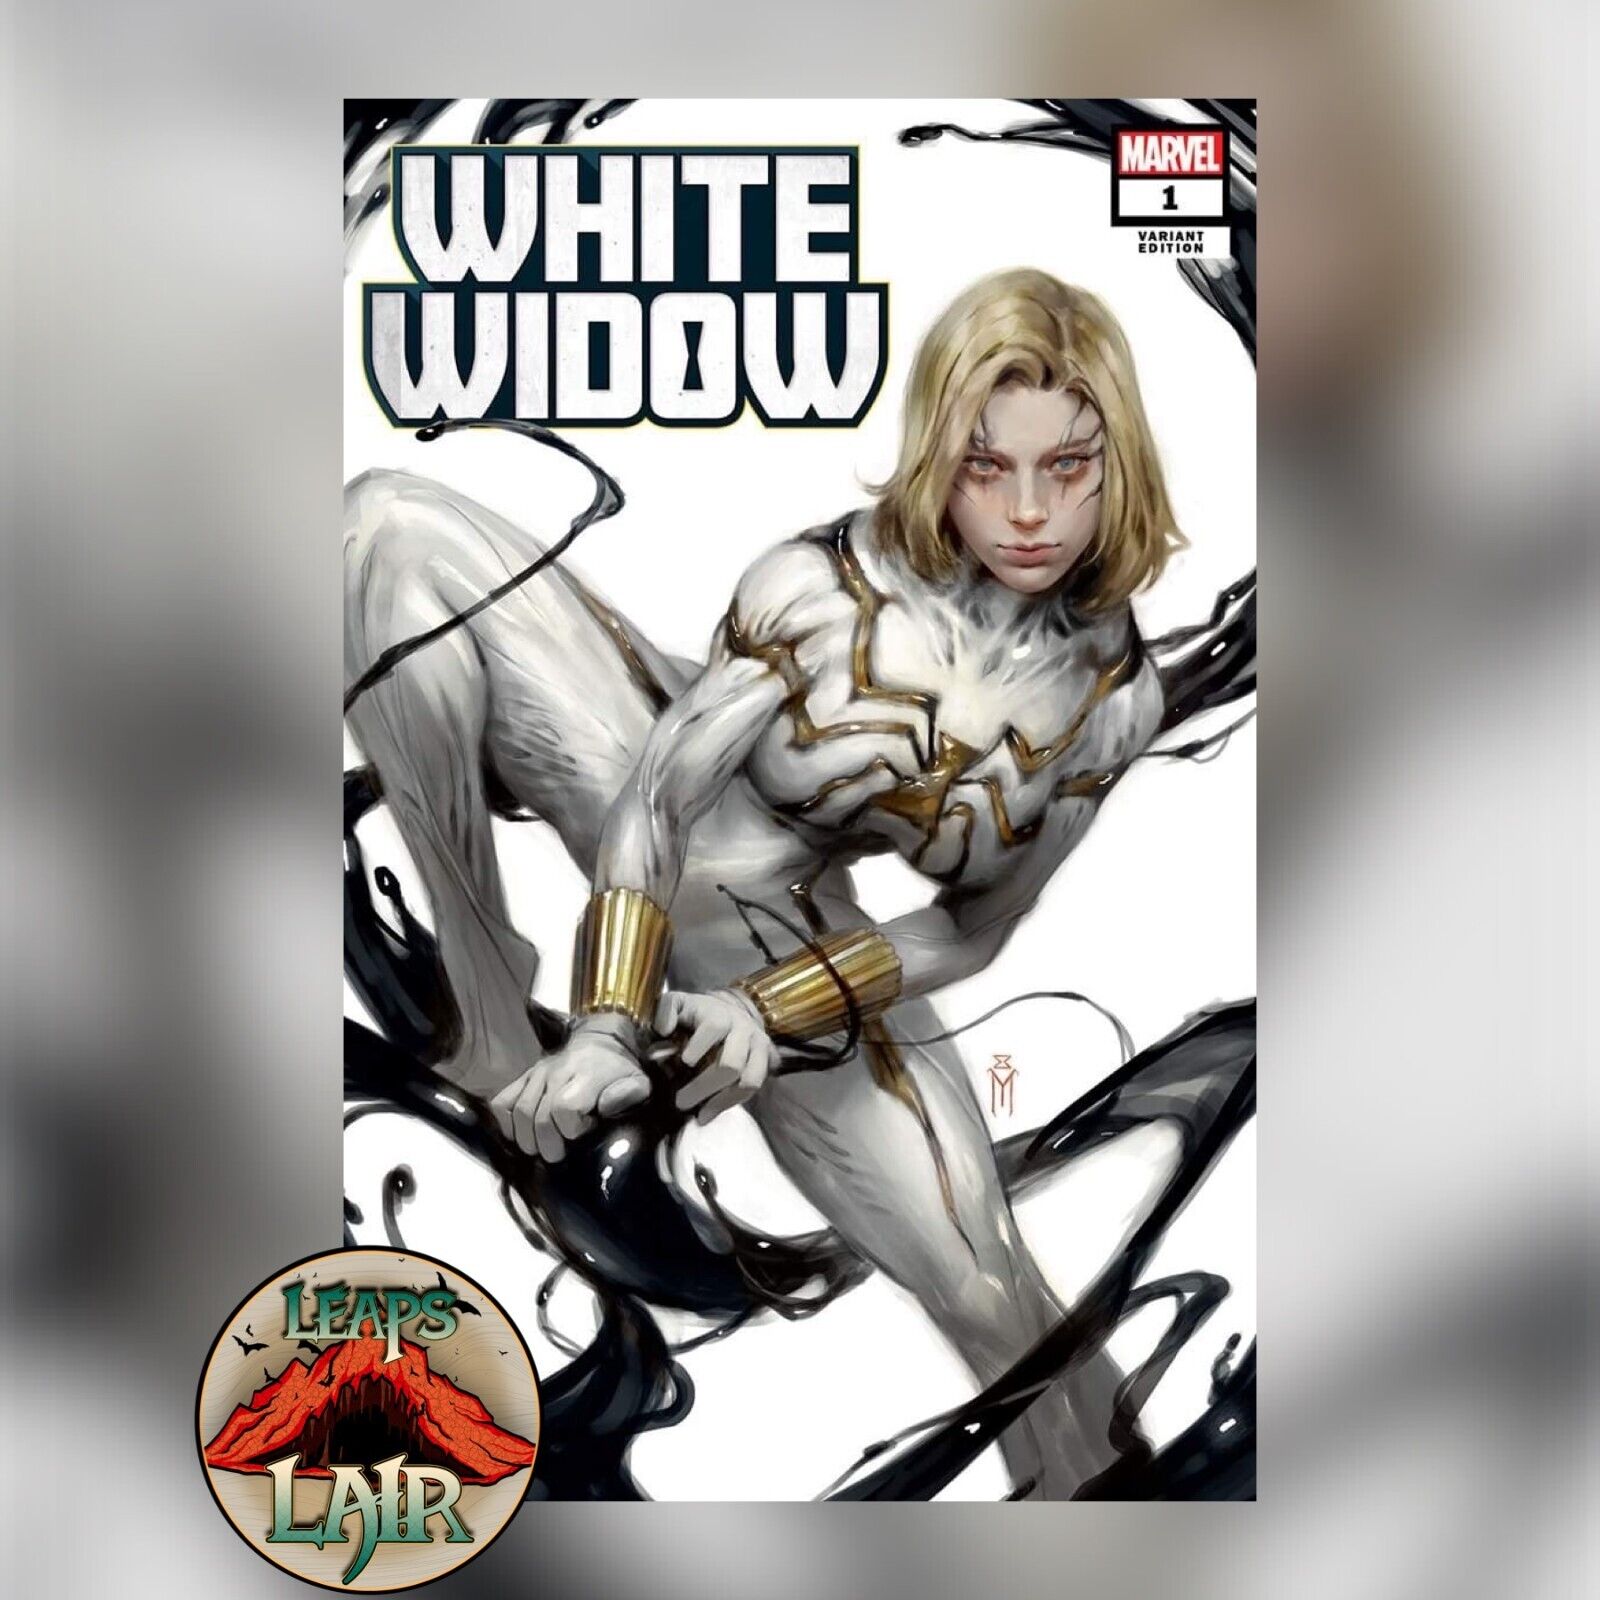 WHITE WIDOW #1 UNKNOWN COMICS MIGUEL MERCADO EXCLUSIVE VARIANT ~ MARVEL COMICS